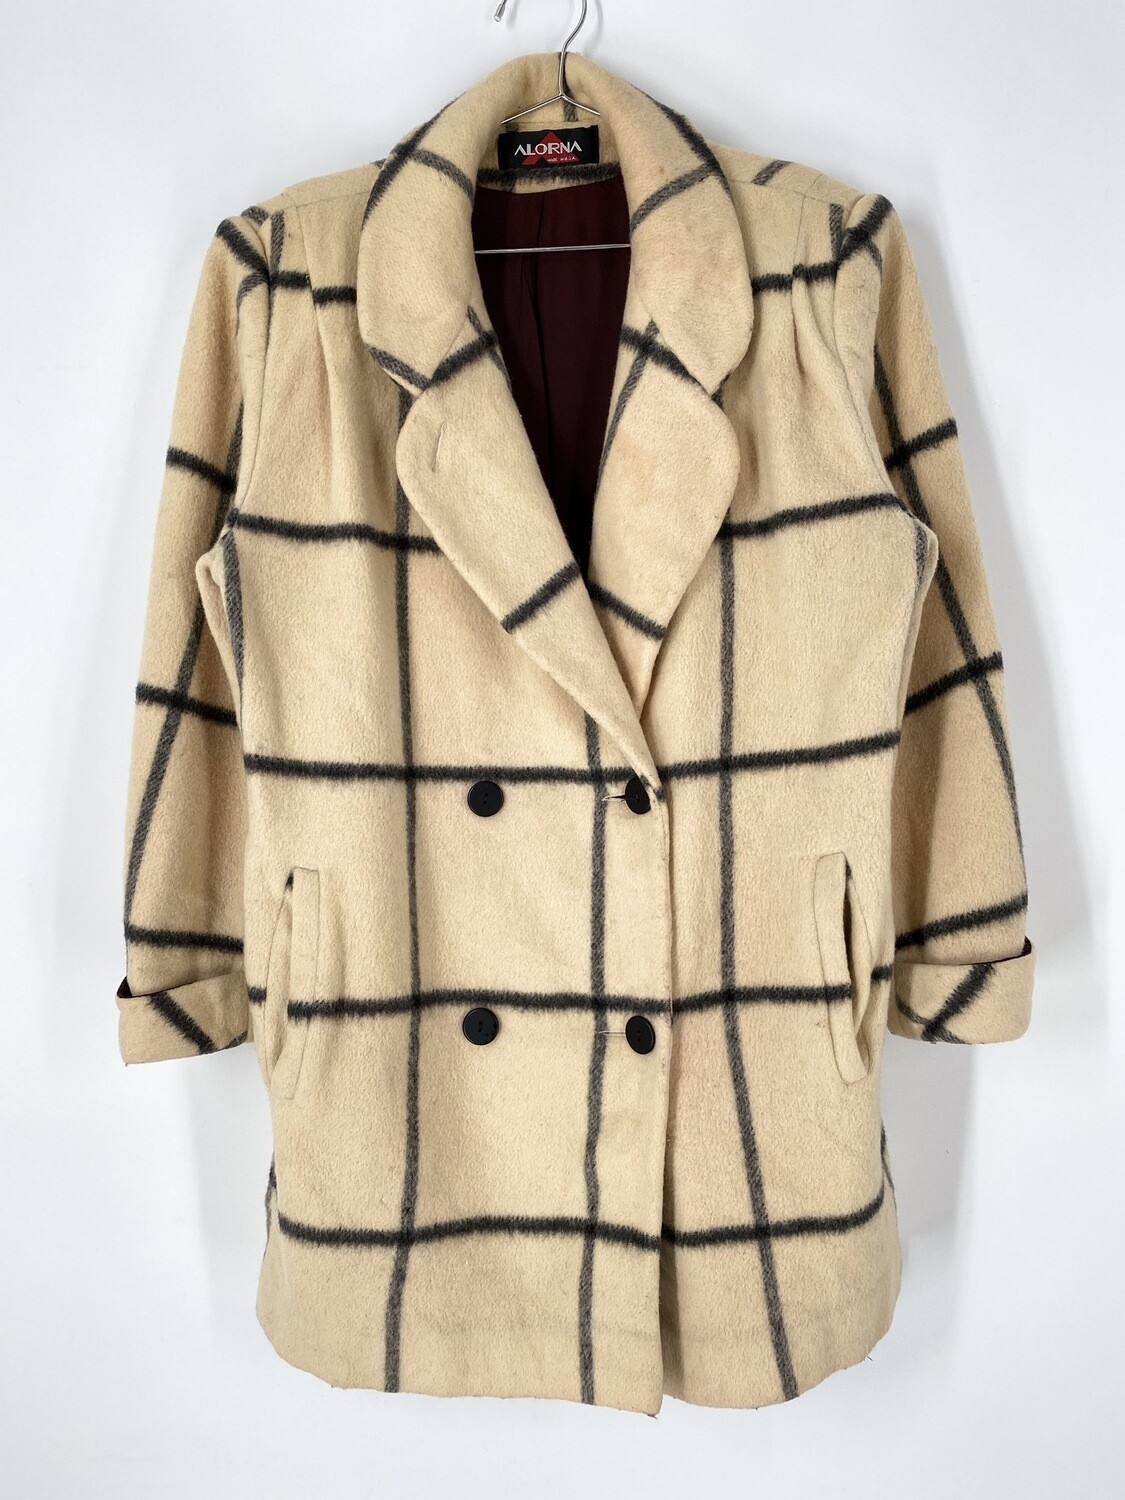 Alorna Black And Tan Checkered Coat Size L